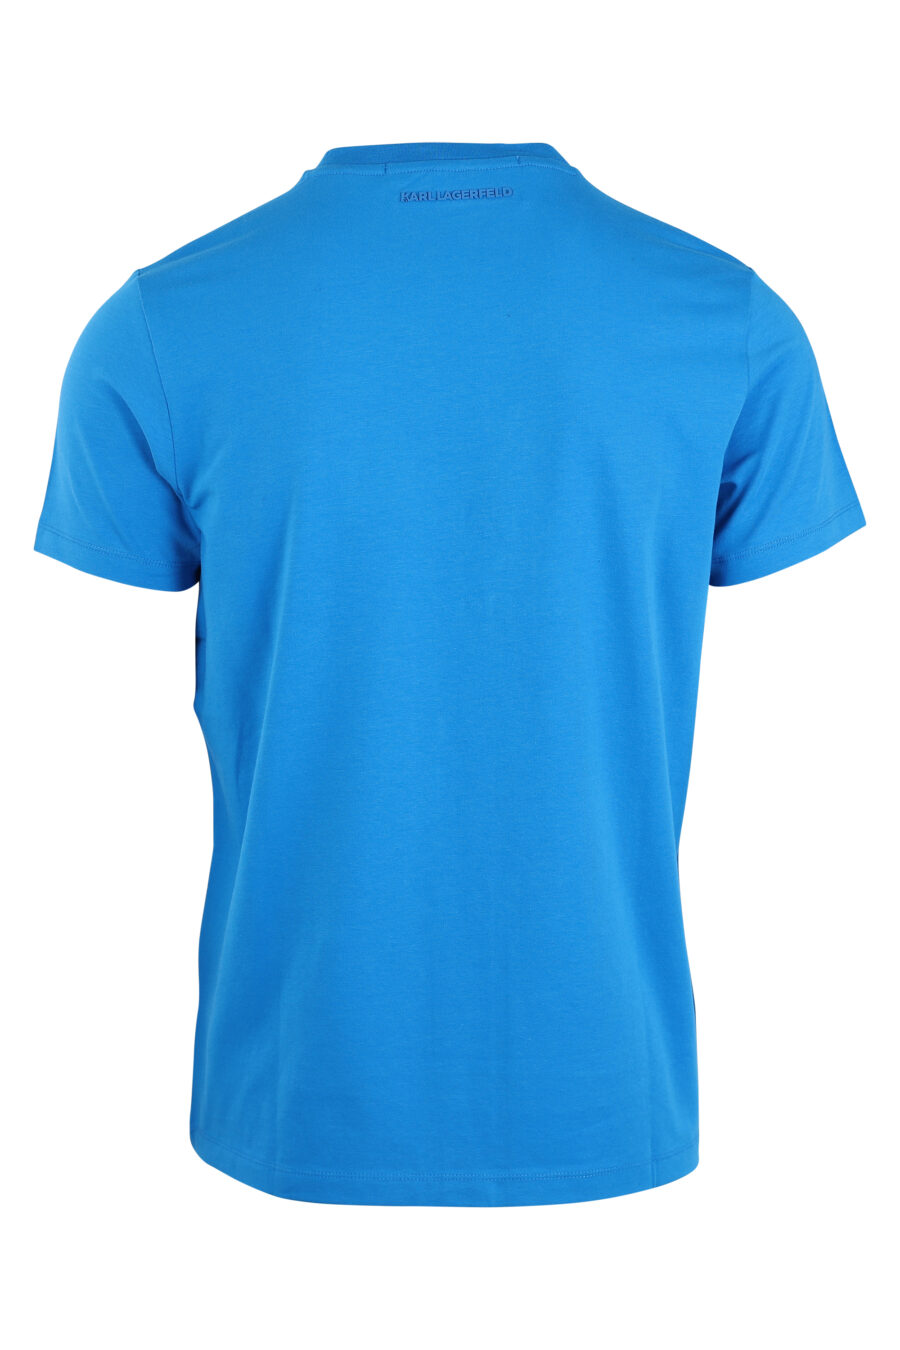 Camiseta azul con logo "rue st-guillaume" - IMG 4343